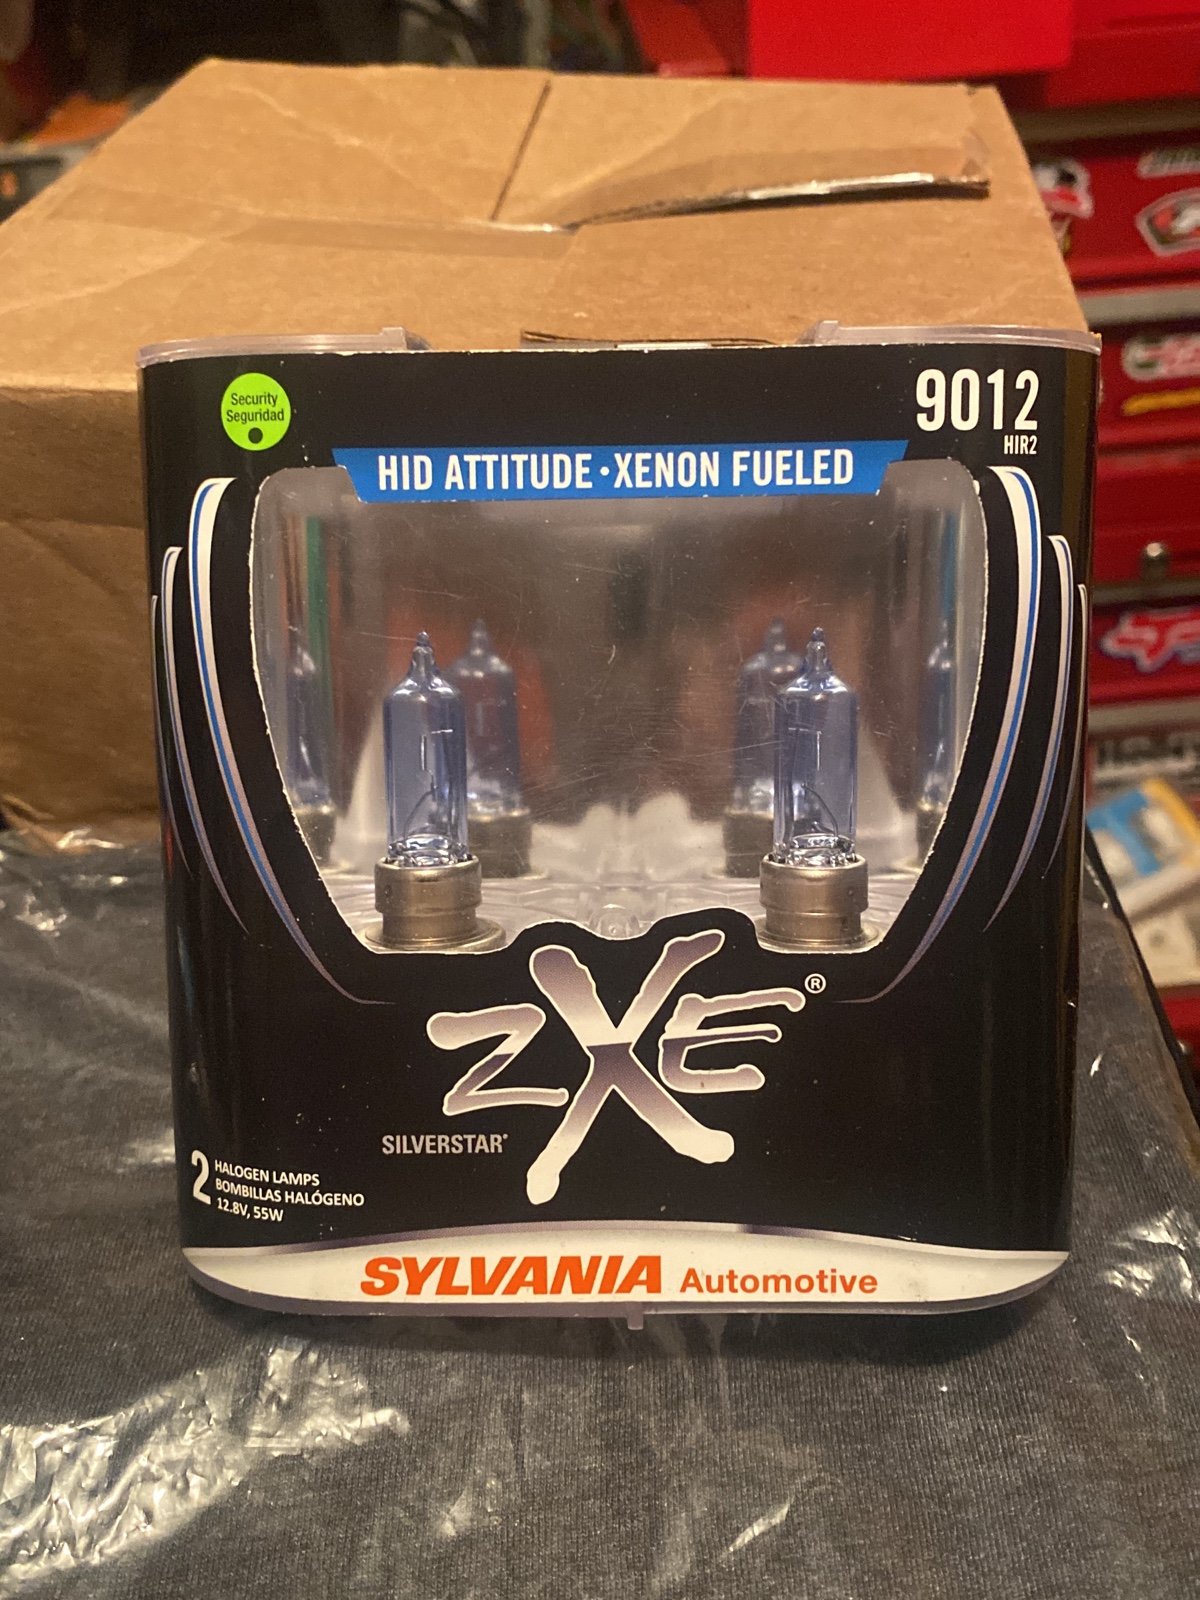 Sylvania 9012 Silverstar ZXE HID Attitude, Xenon Filled Halogen Headlight Bulbs L3DKDZKxm